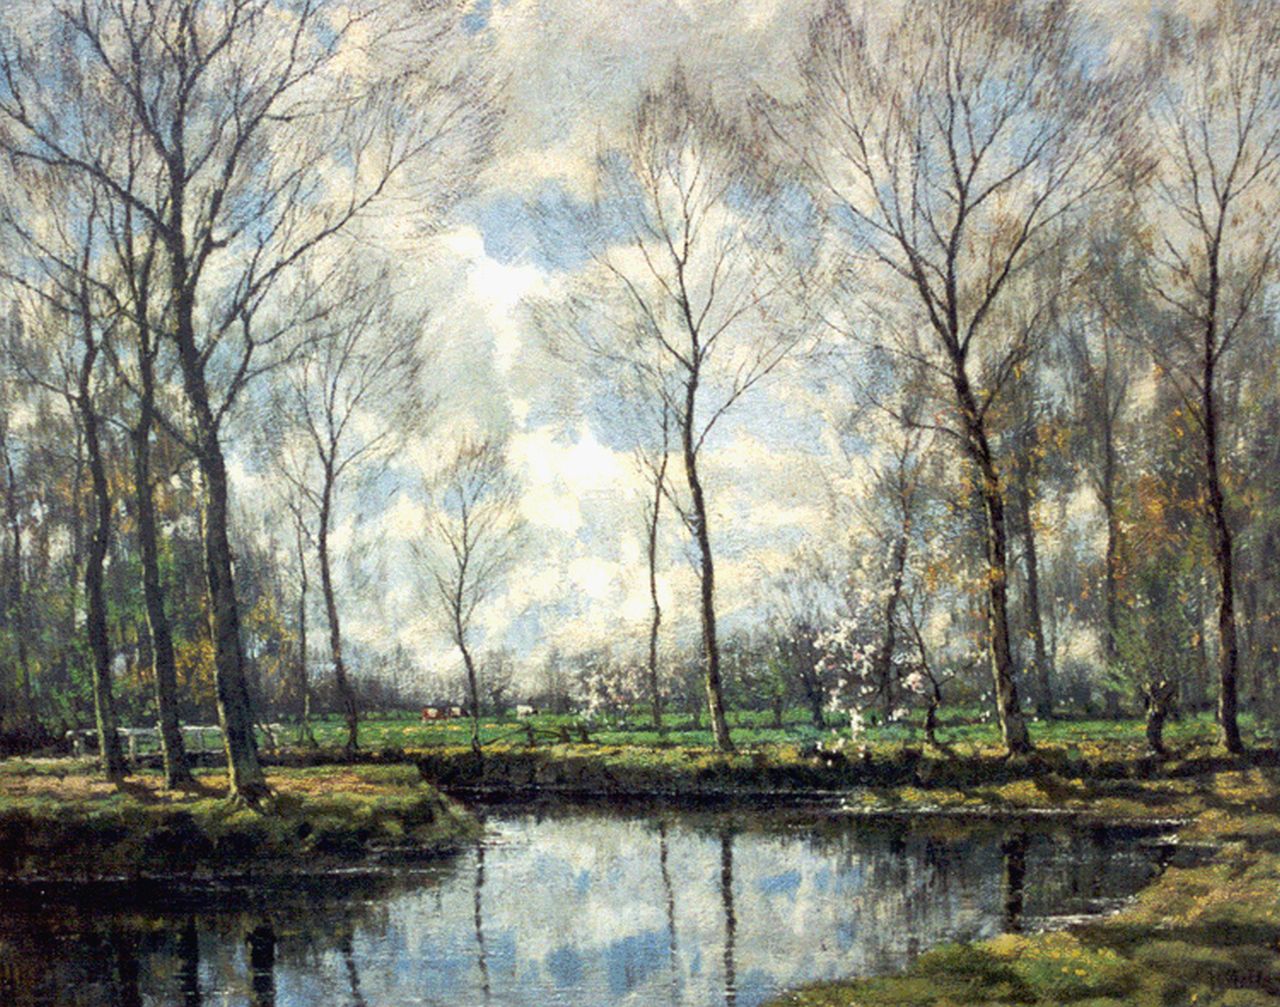 Gorter A.M.  | 'Arnold' Marc Gorter, The Vordense Beek in spring, oil on canvas 75.3 x 95.4 cm, signed l.r.